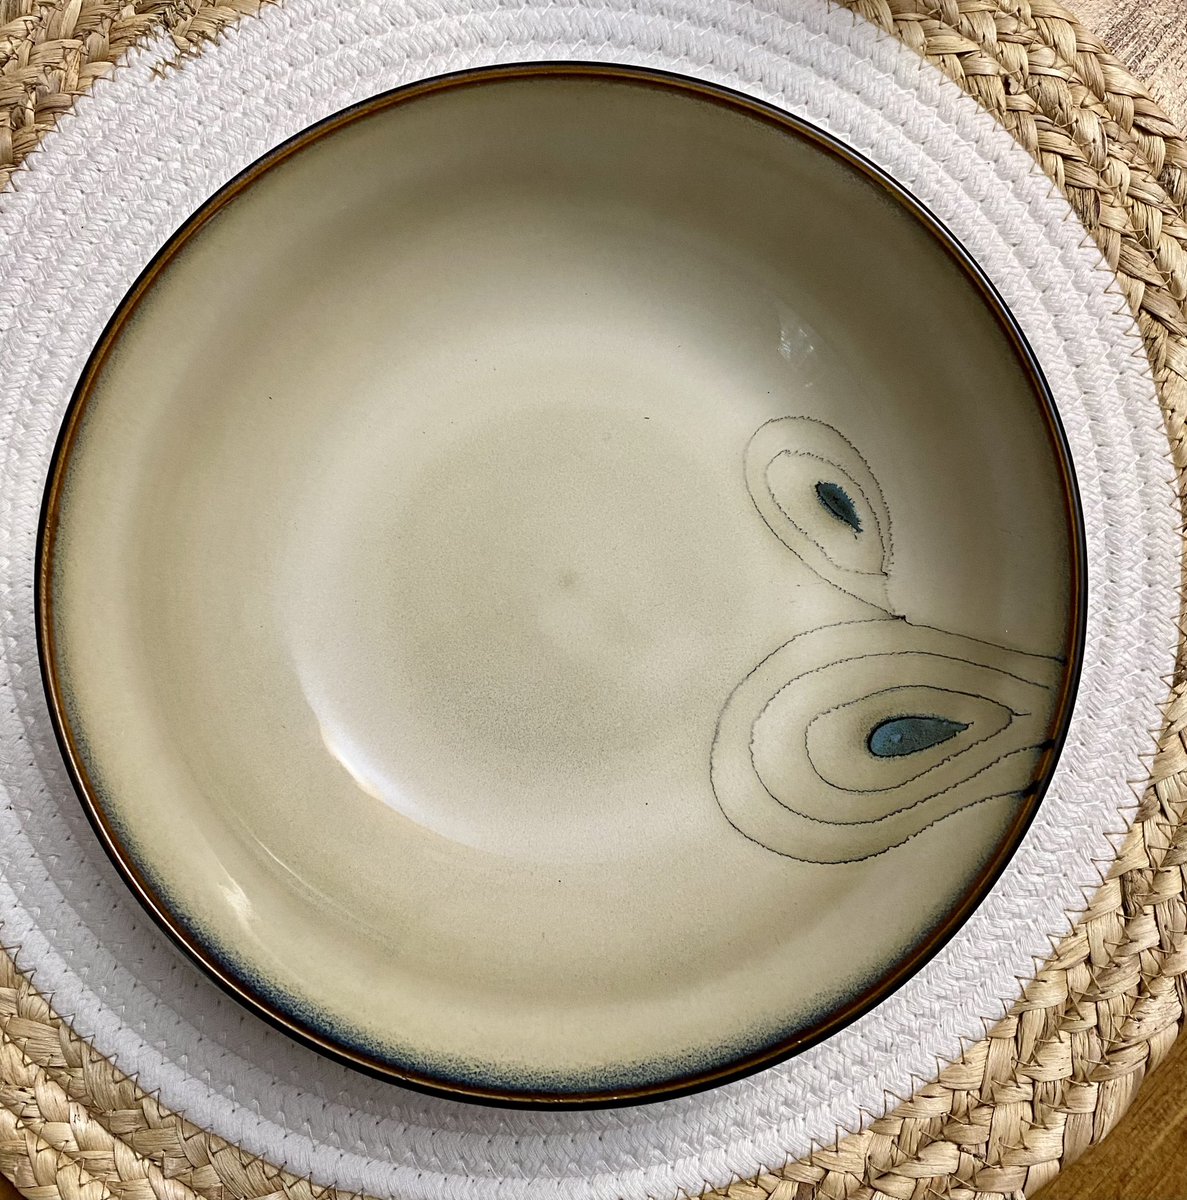 #PIER1 IMPORTS #TealReactive Soup Cereal Pasta Bowl #Stoneware ebay.com/itm/1661892866… #eBay via @eBay